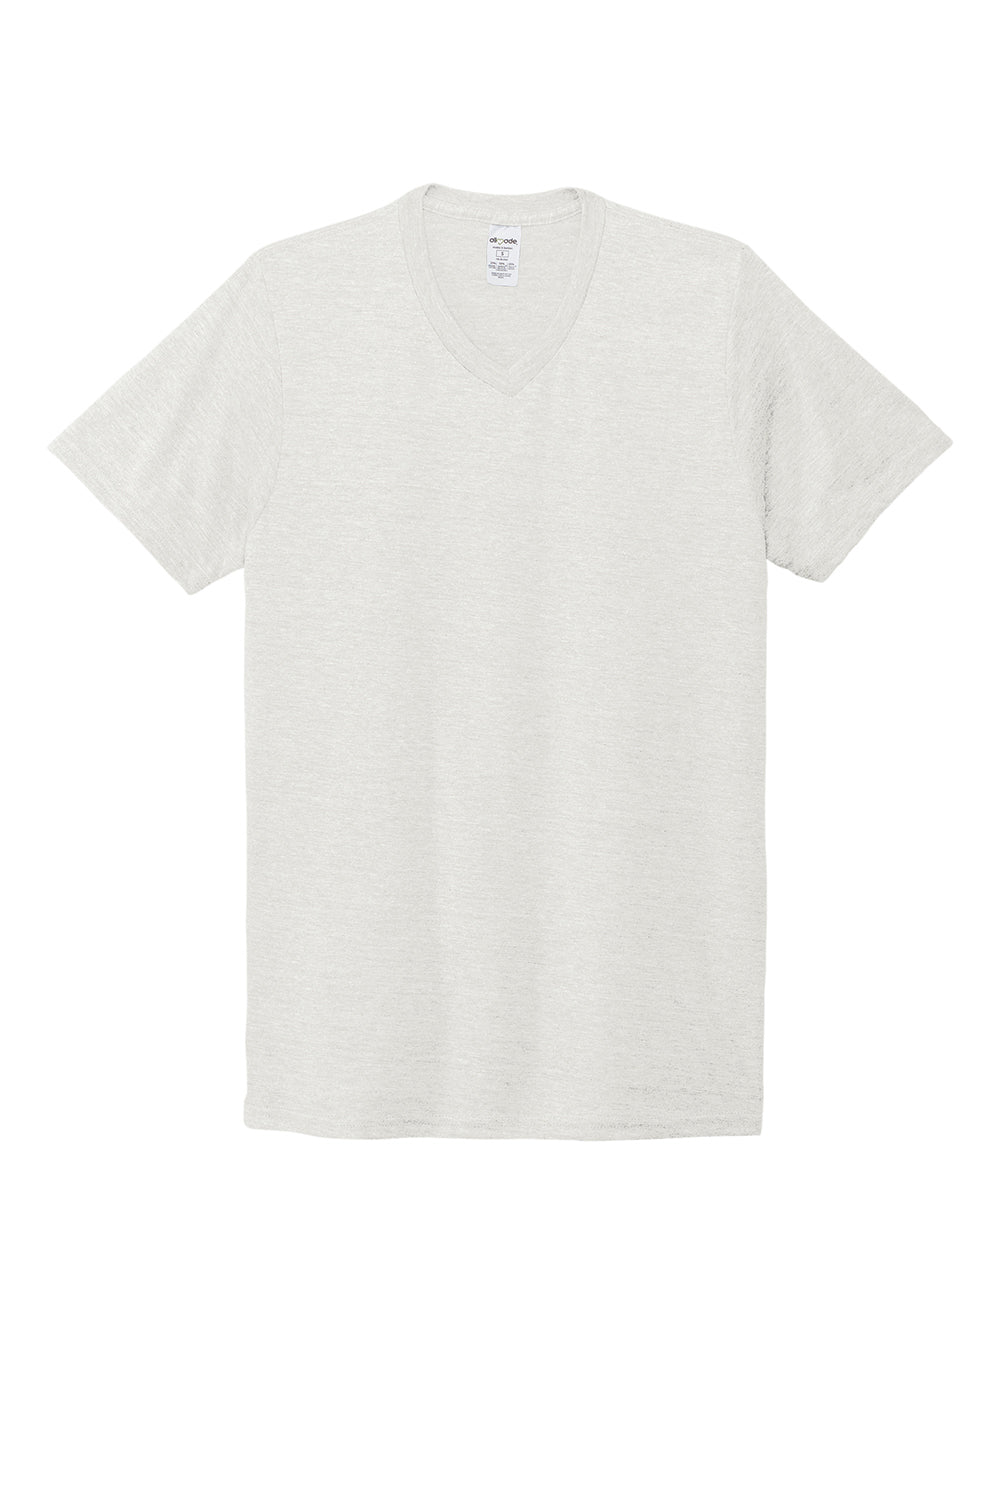 Allmade AL2014 Mens Short Sleeve V-Neck T-Shirt Fairly White Flat Front